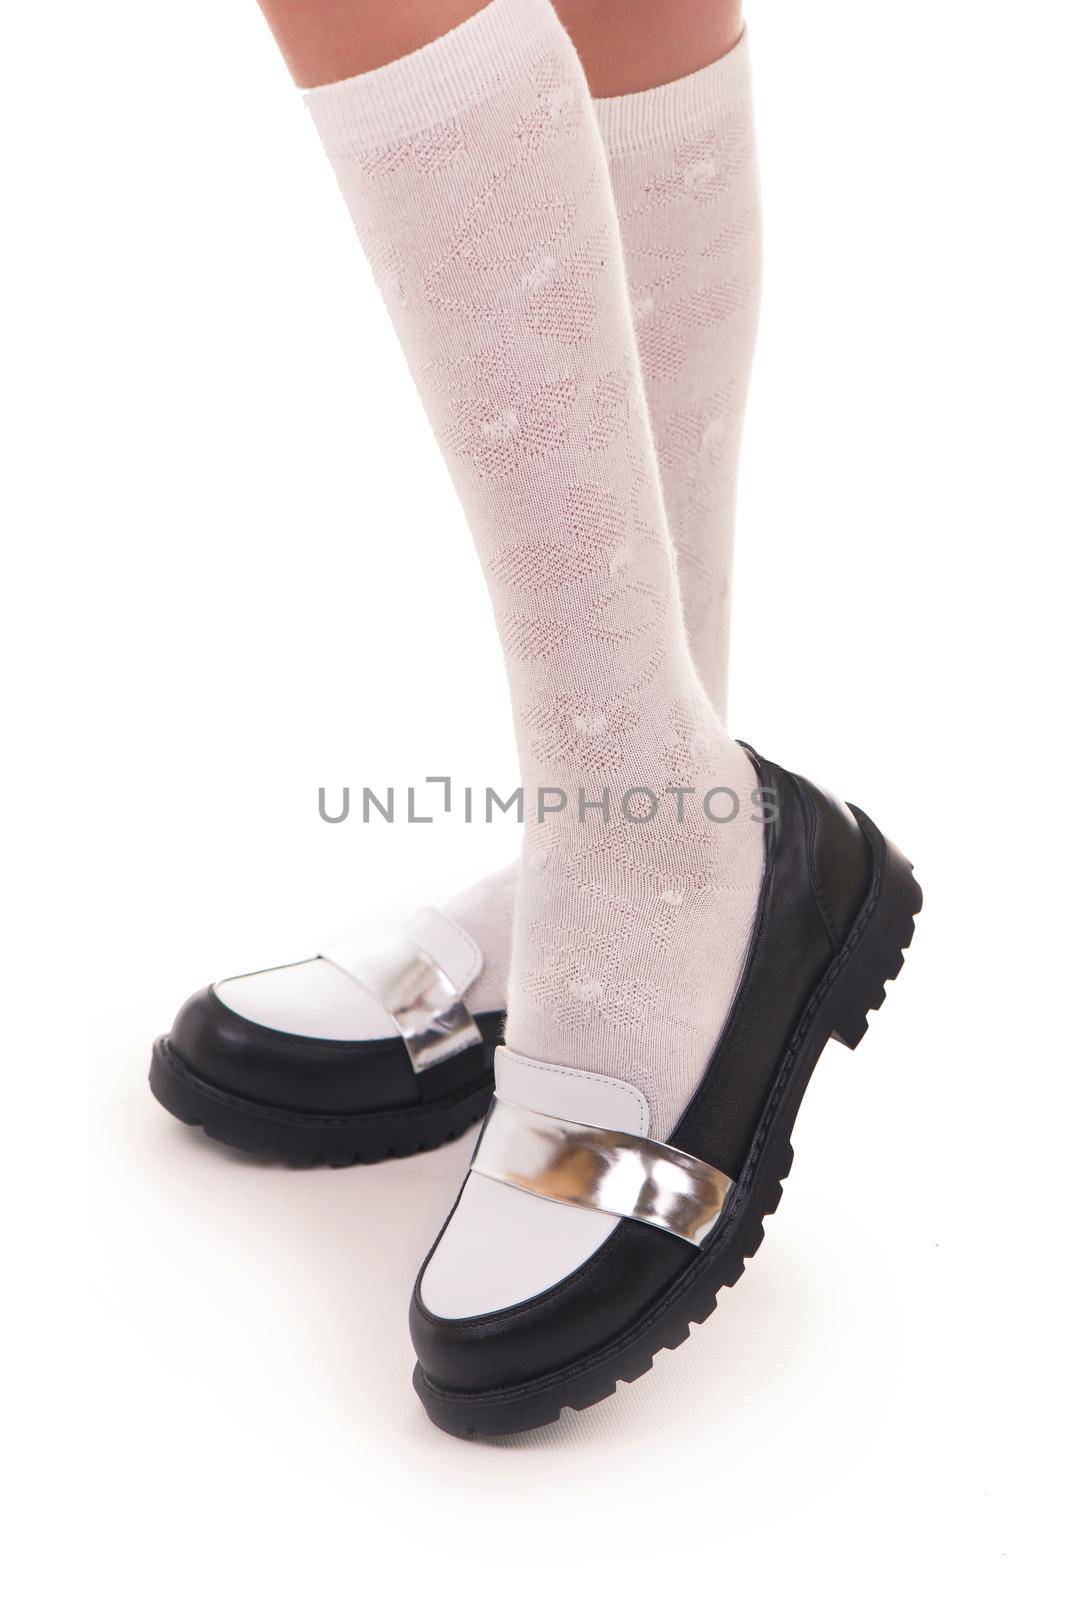 Black shine leather girl shoes isolated on white.